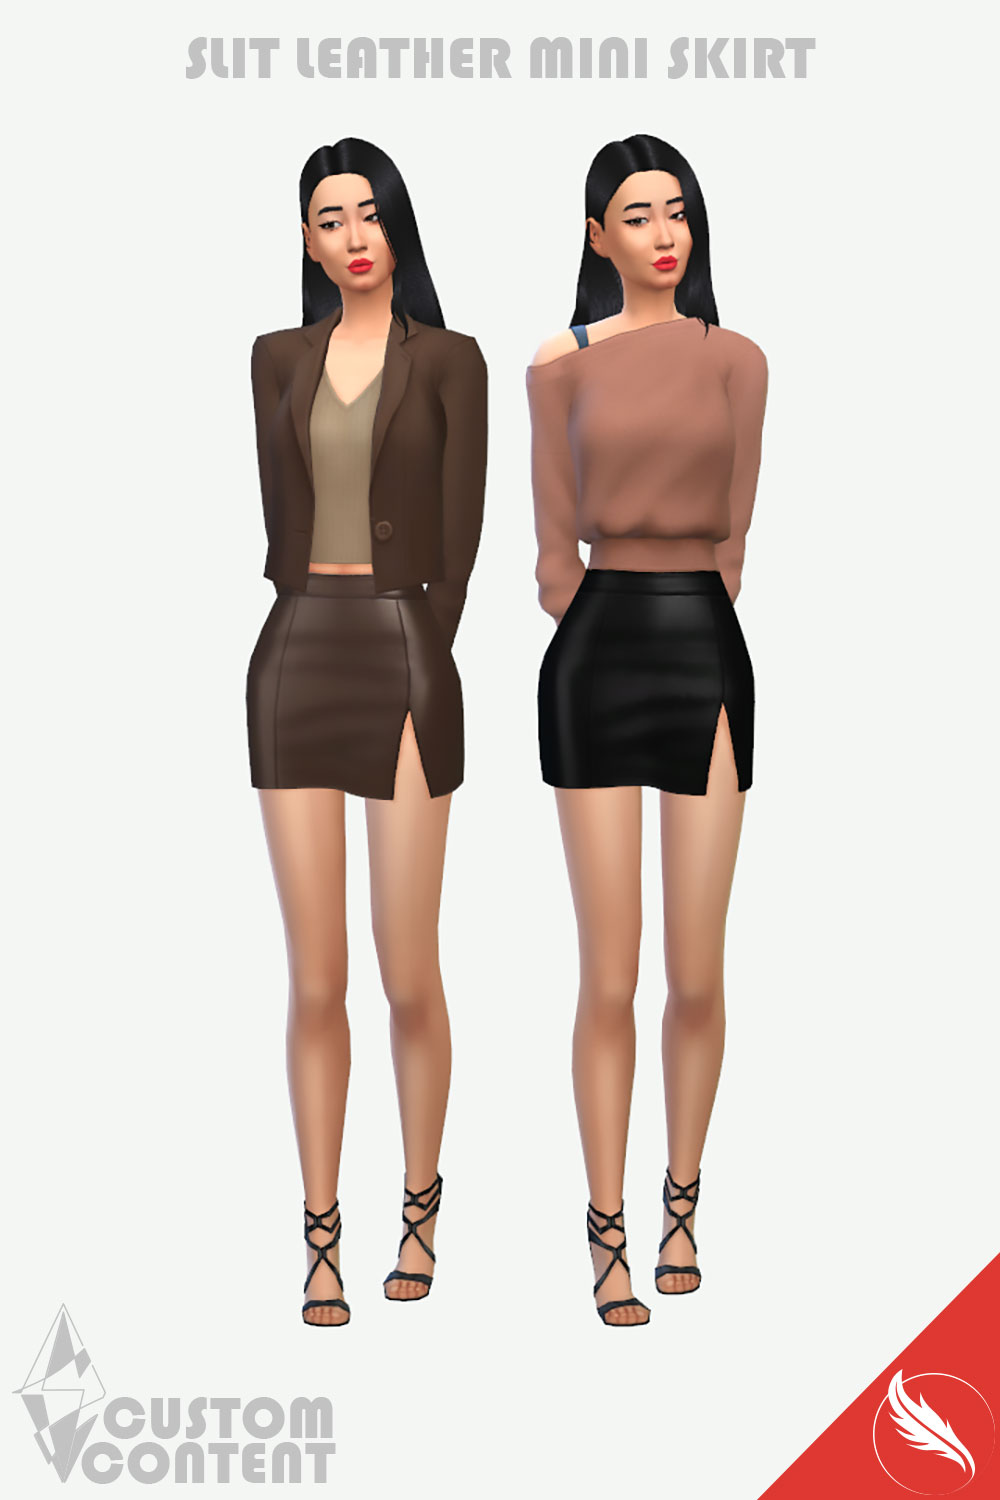 The Sims 4 Mini Skirt Custom Content